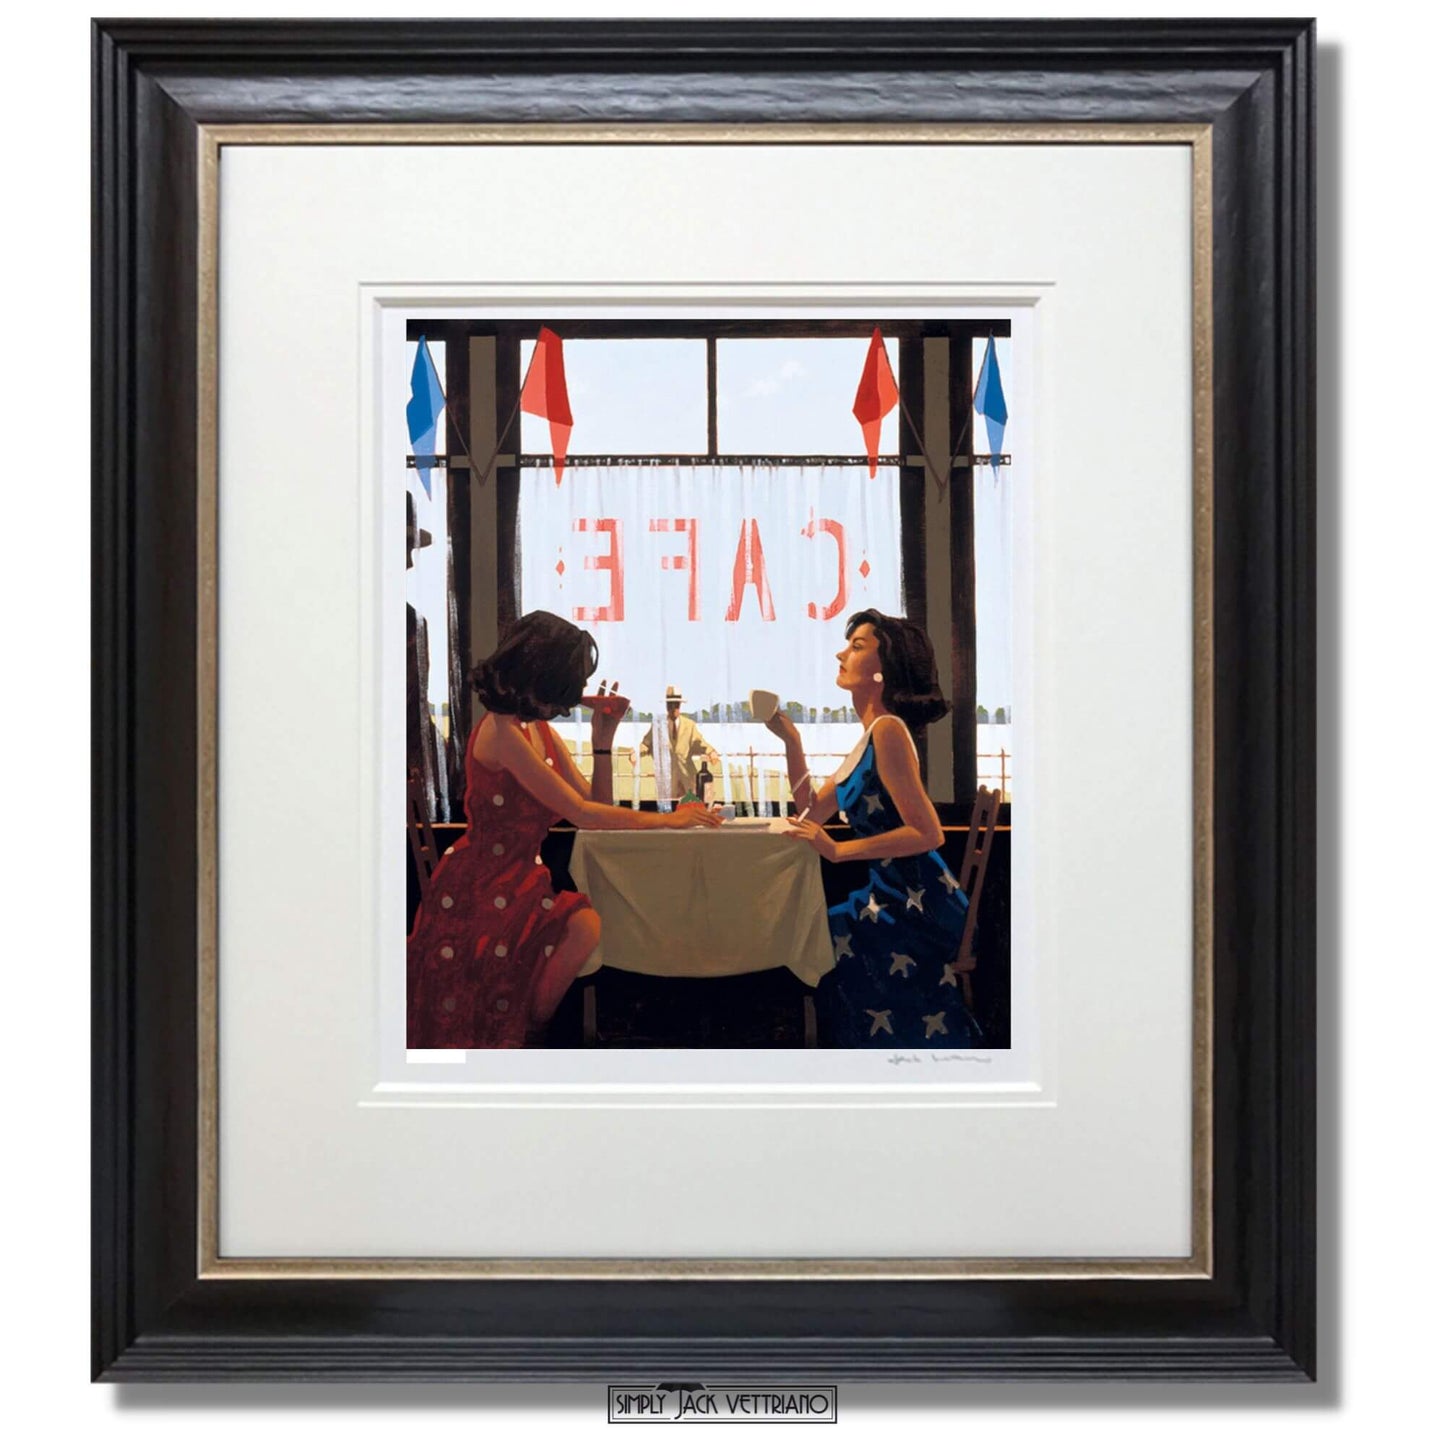 Jack Vettriano Cafe Days Limited Edition Framed